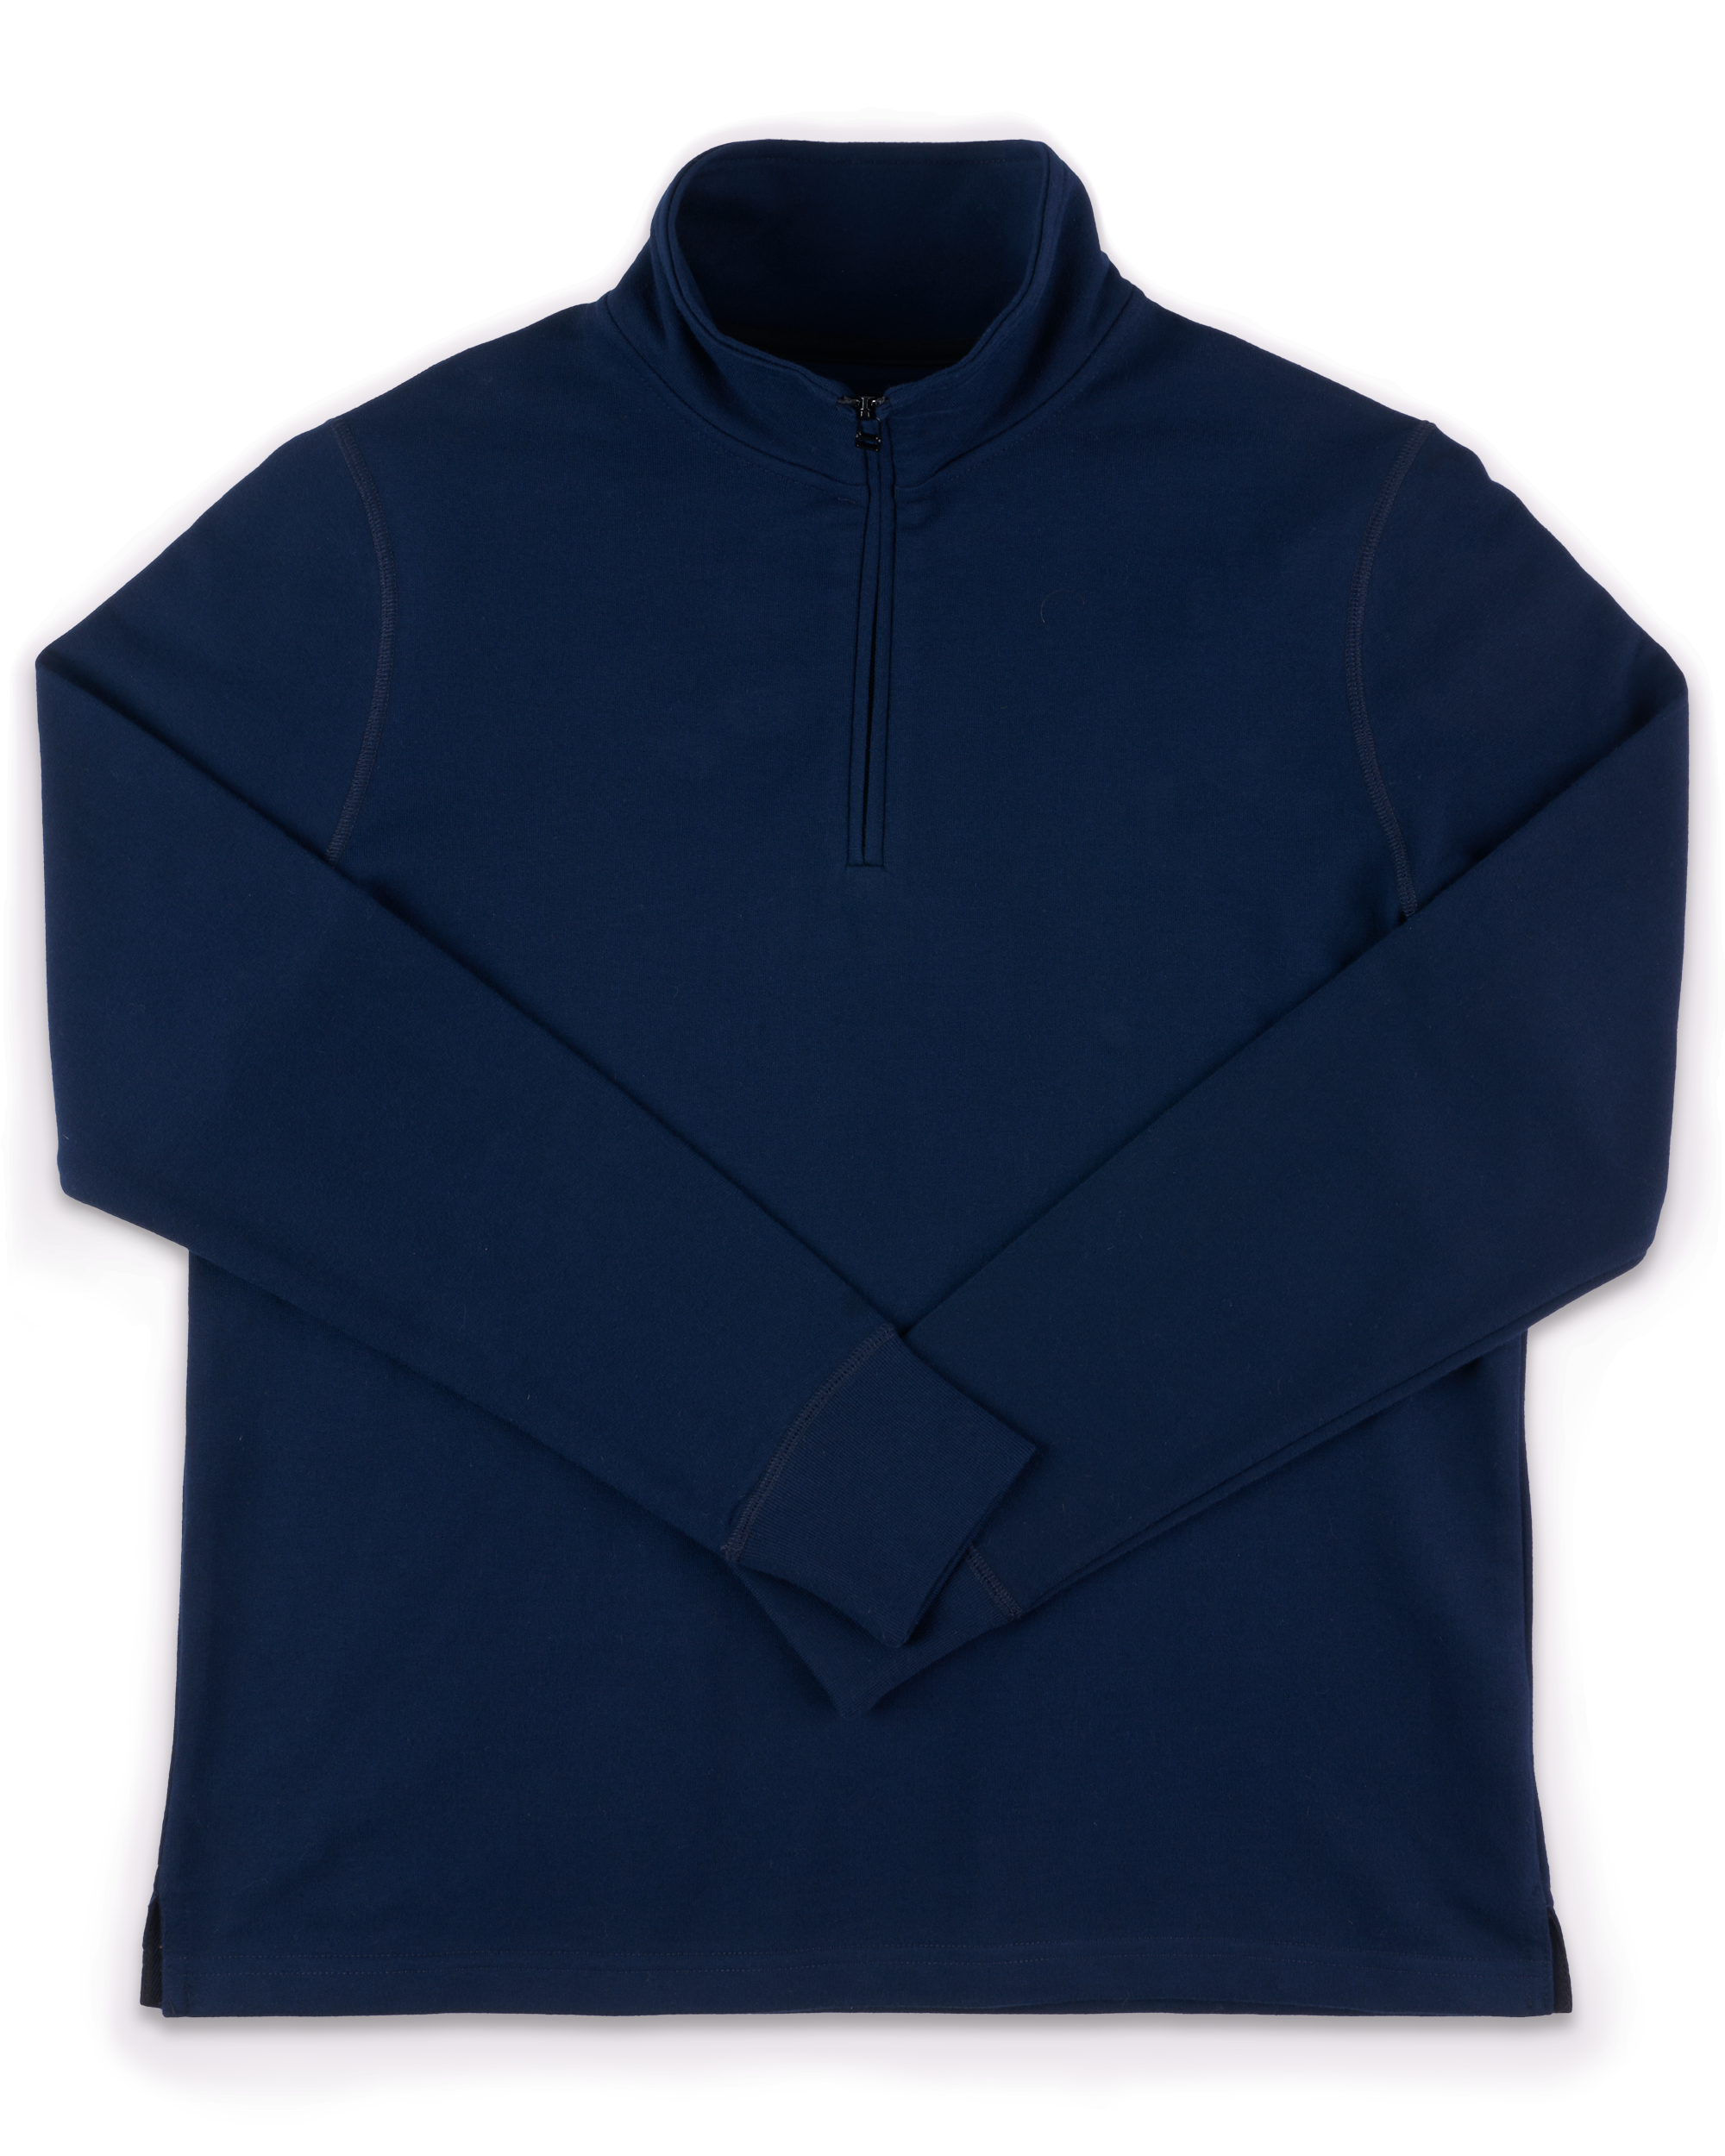 1/4 Zip Sweatshirt Navy - Foreign Rider Co.